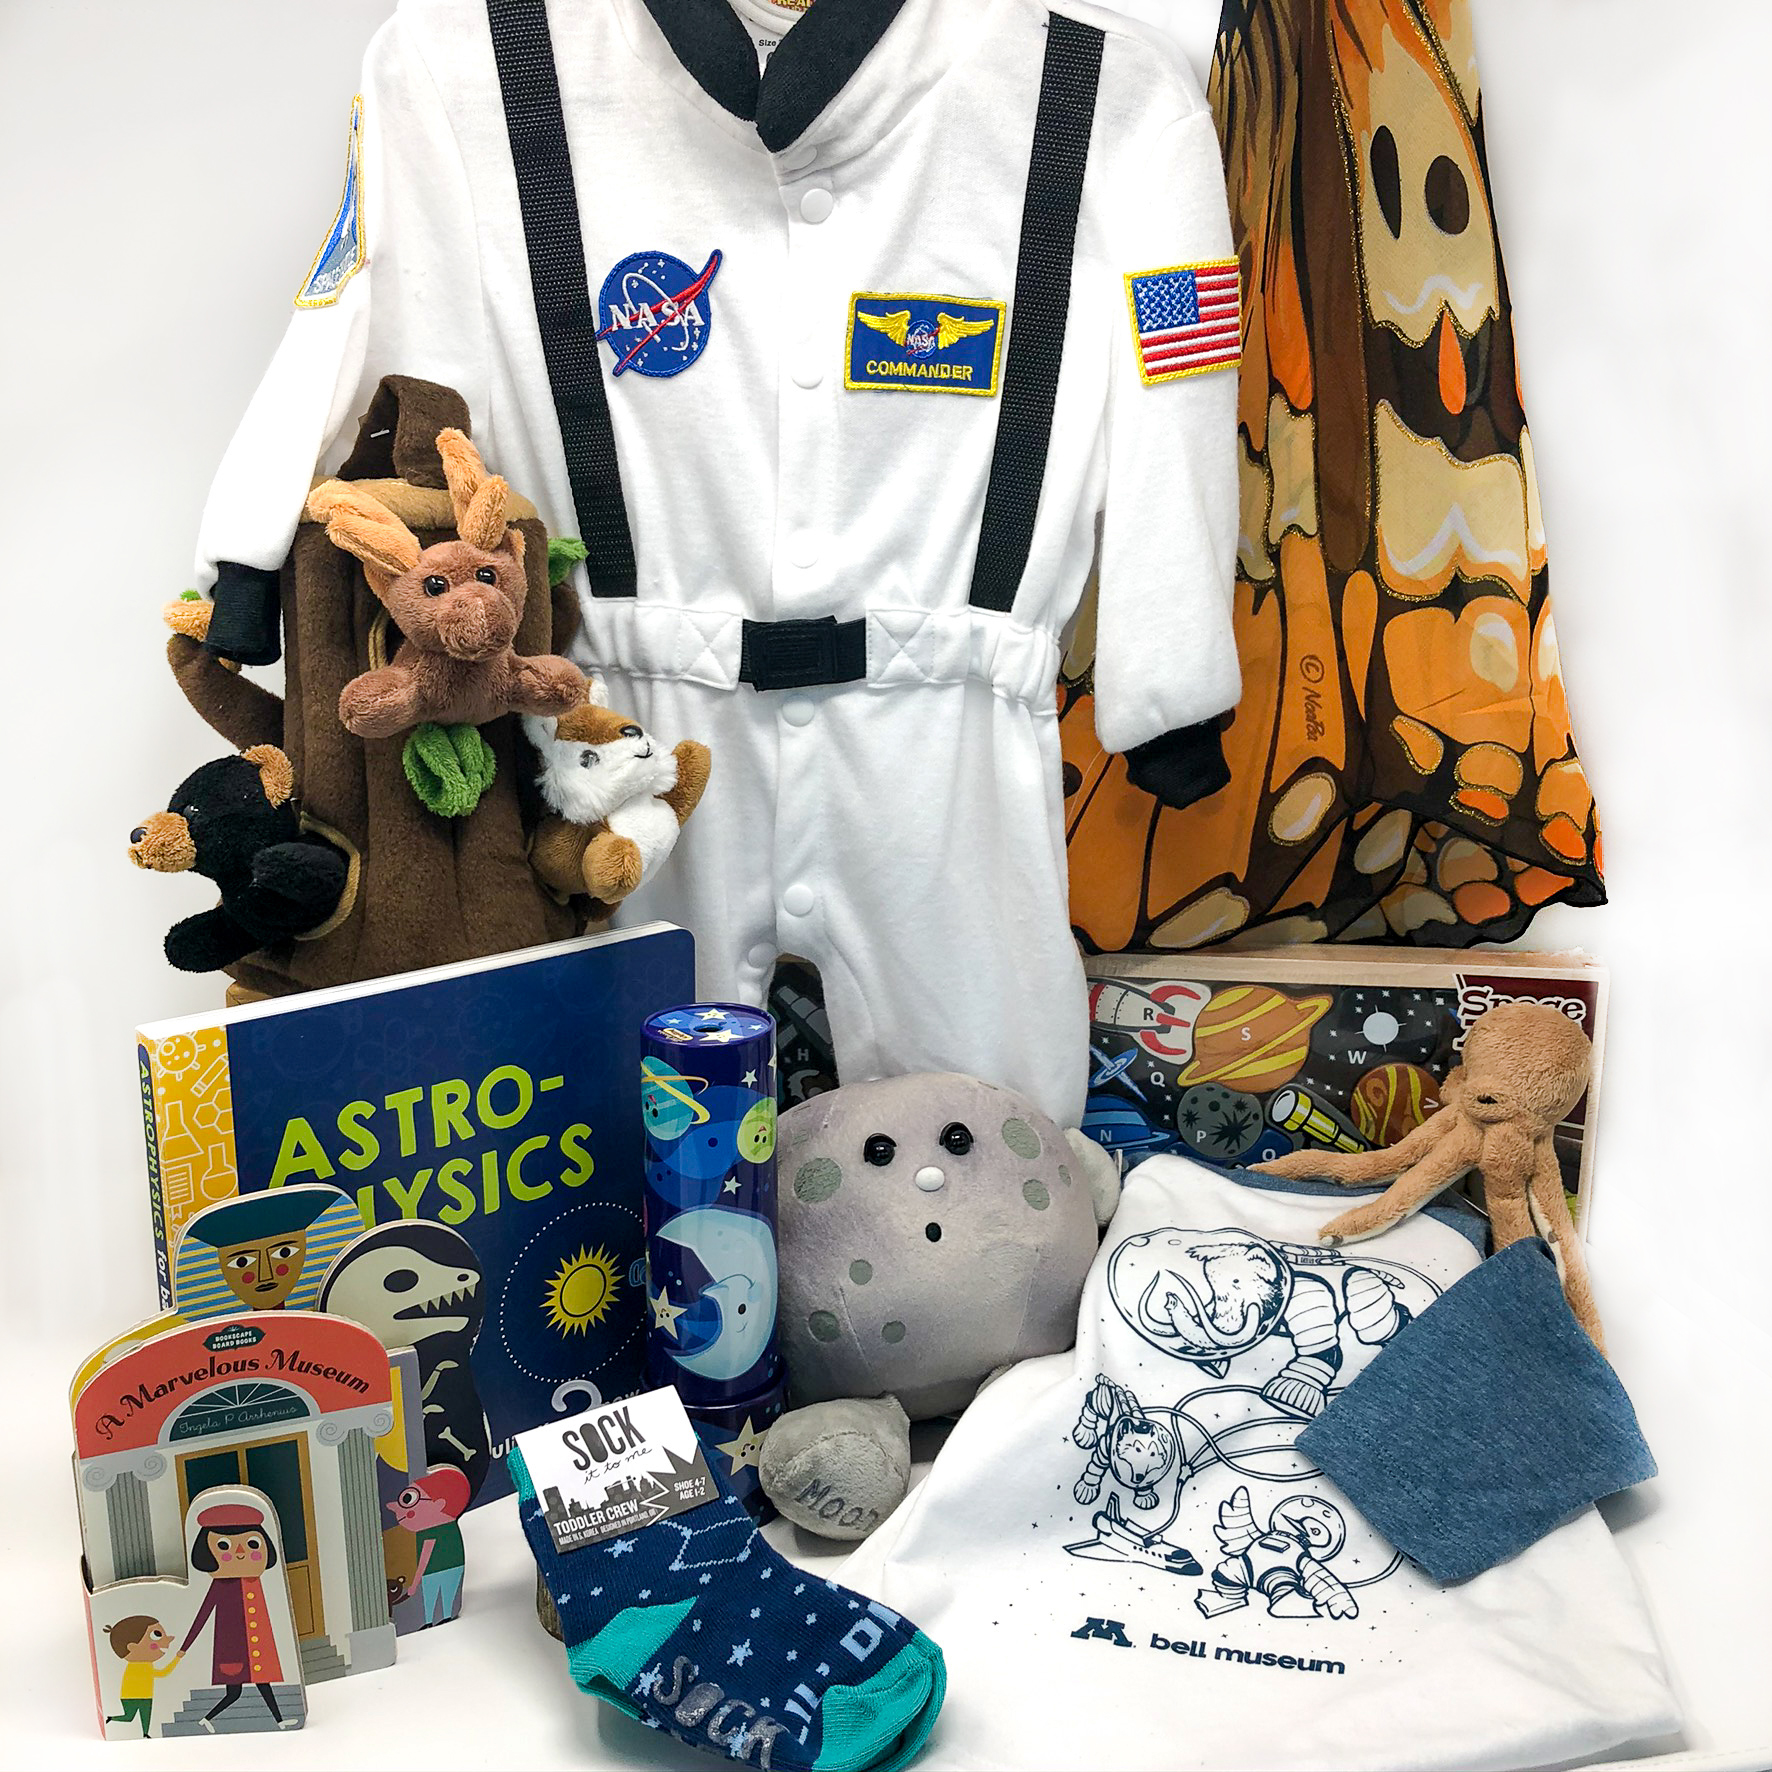 An assortment of kid-geared gifts